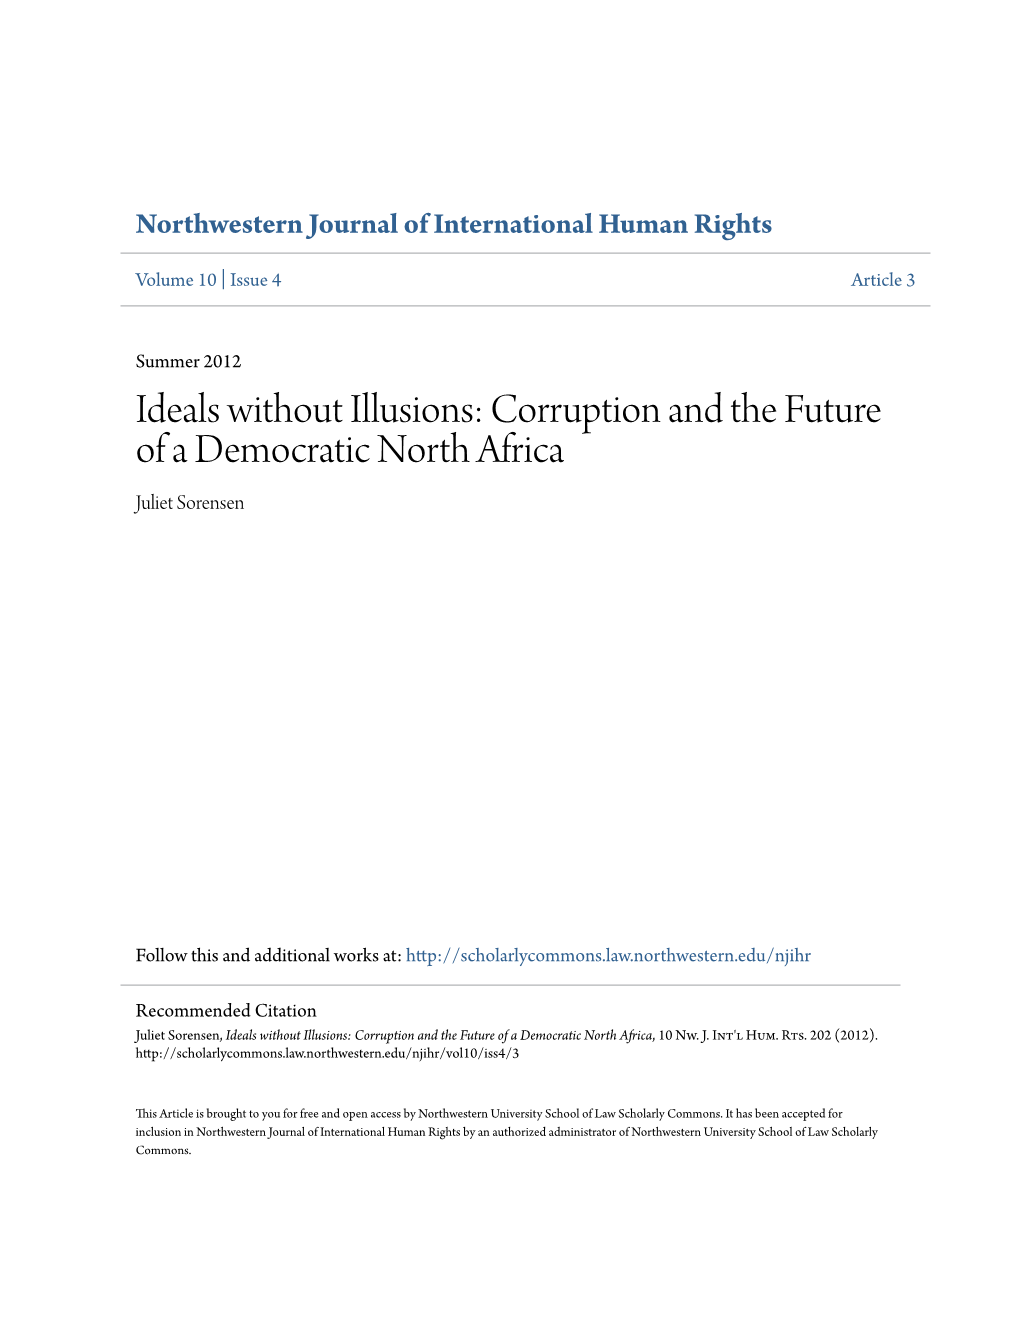 Corruption and the Future of a Democratic North Africa Juliet Sorensen